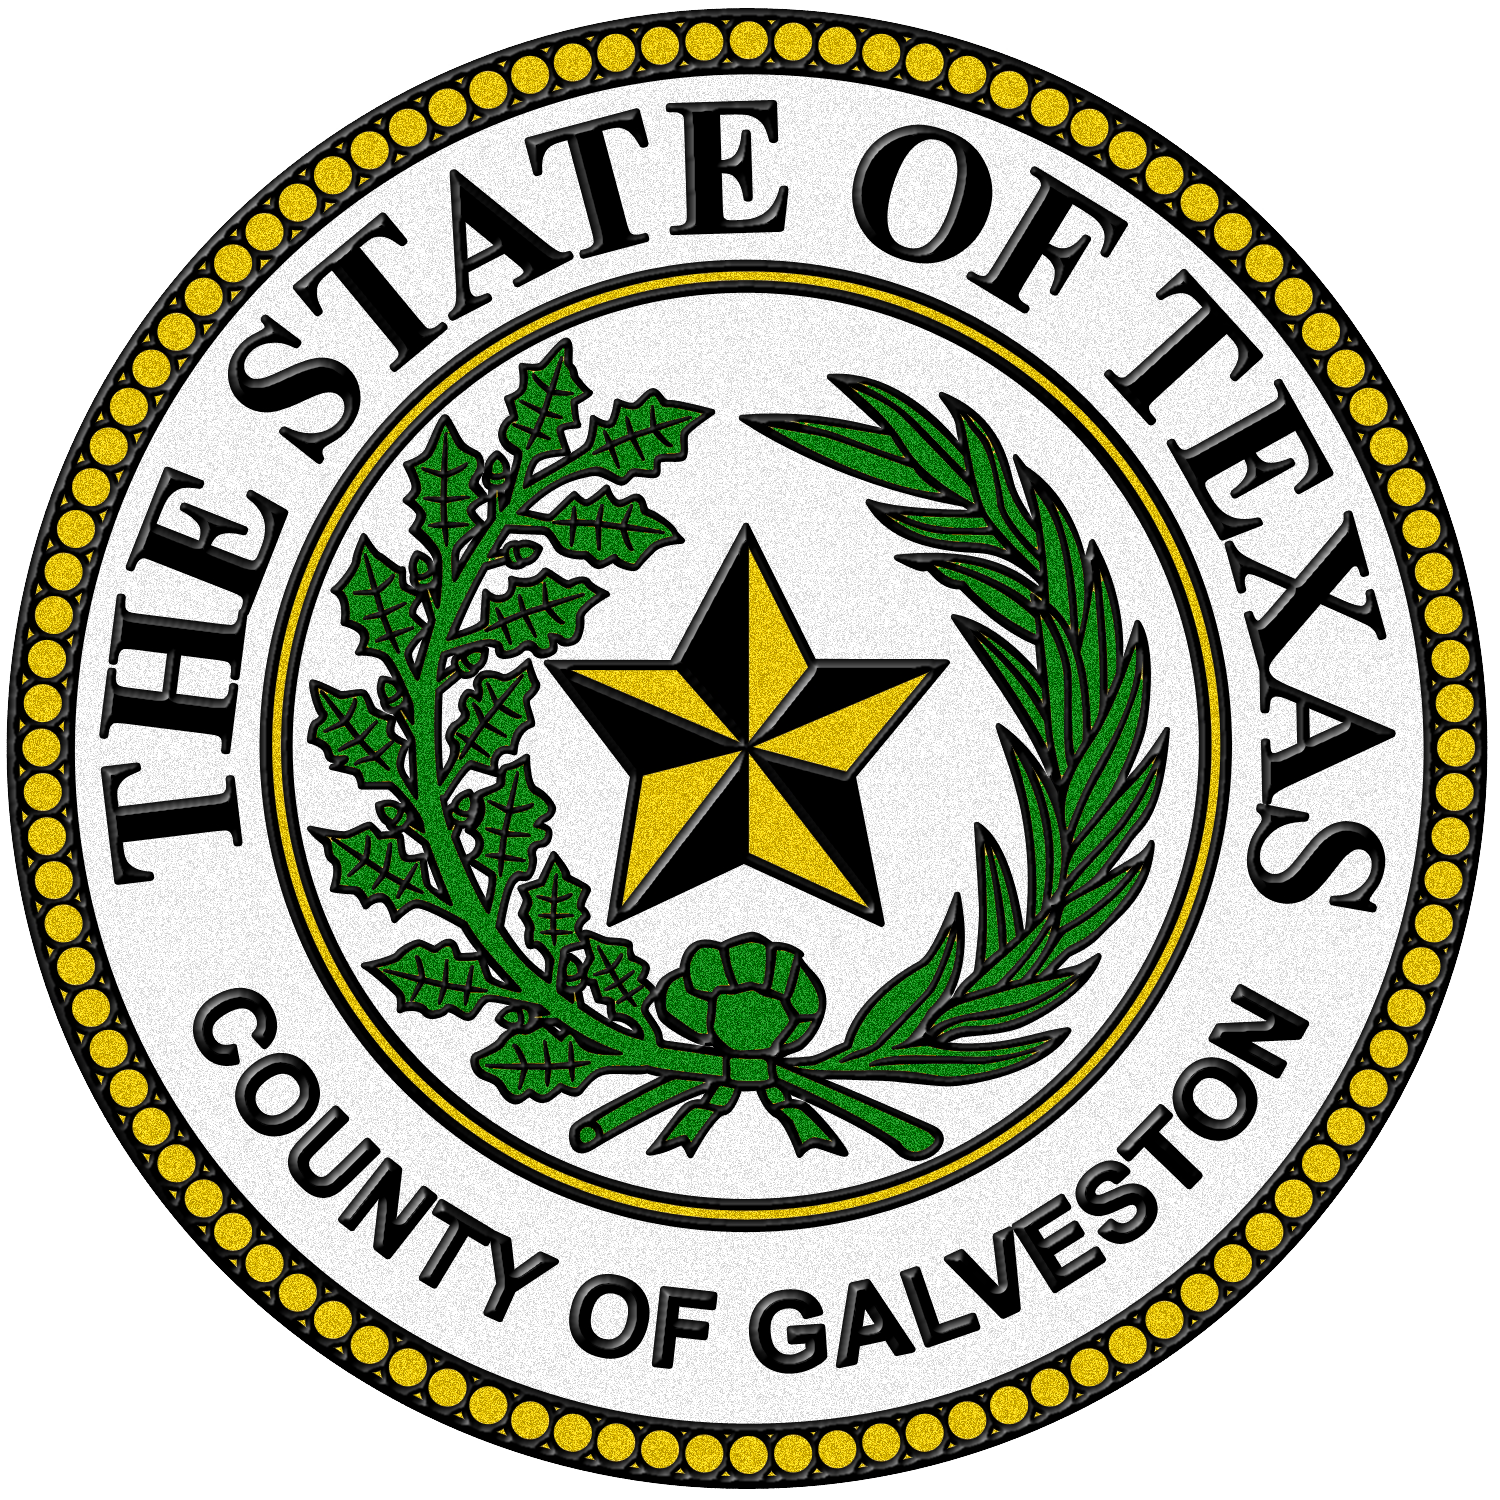 Official Seal for the County of Galveston, Texas